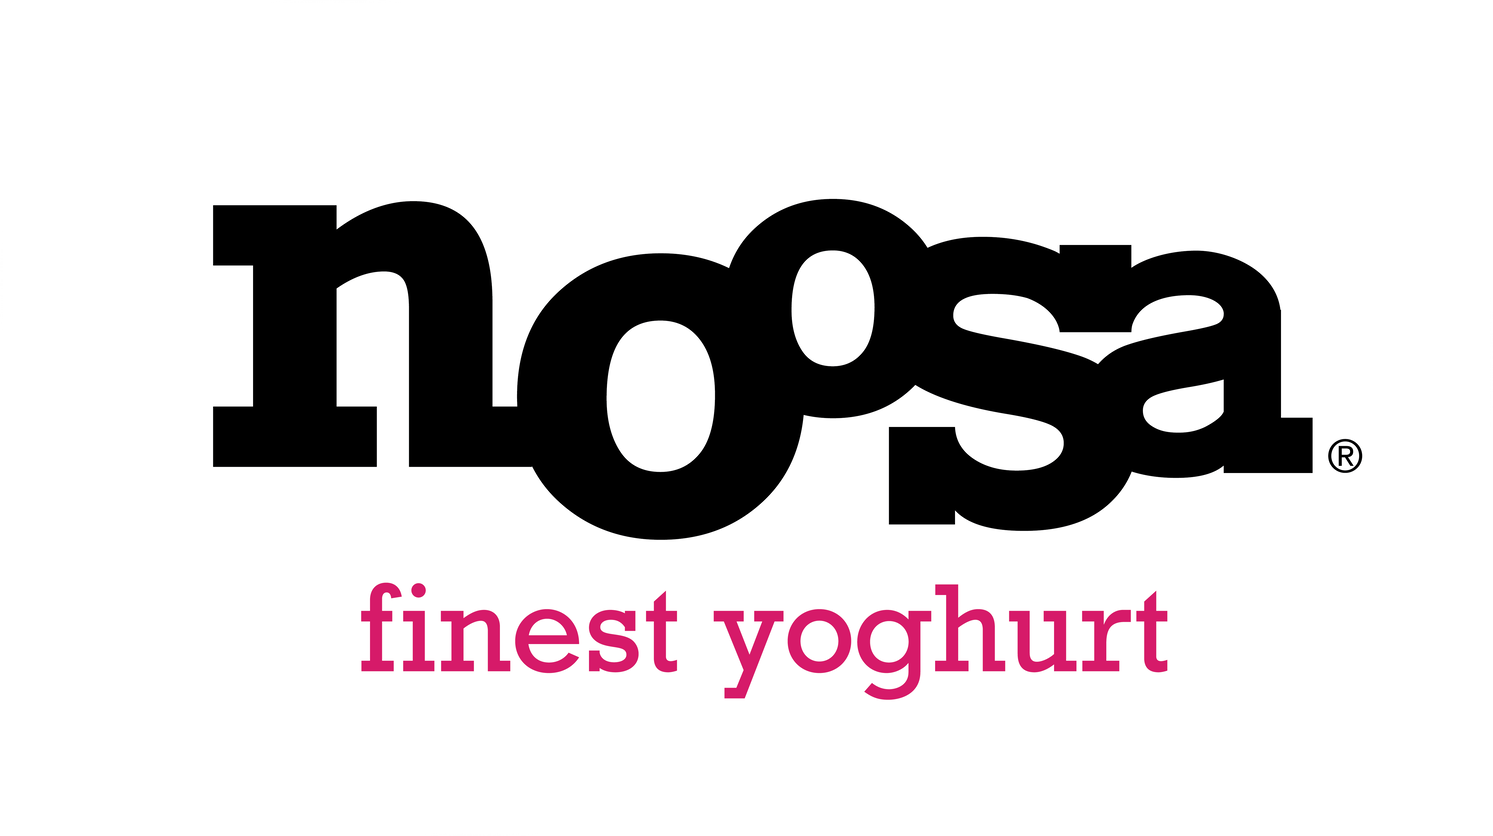 Noosa yoghurt logo 2021